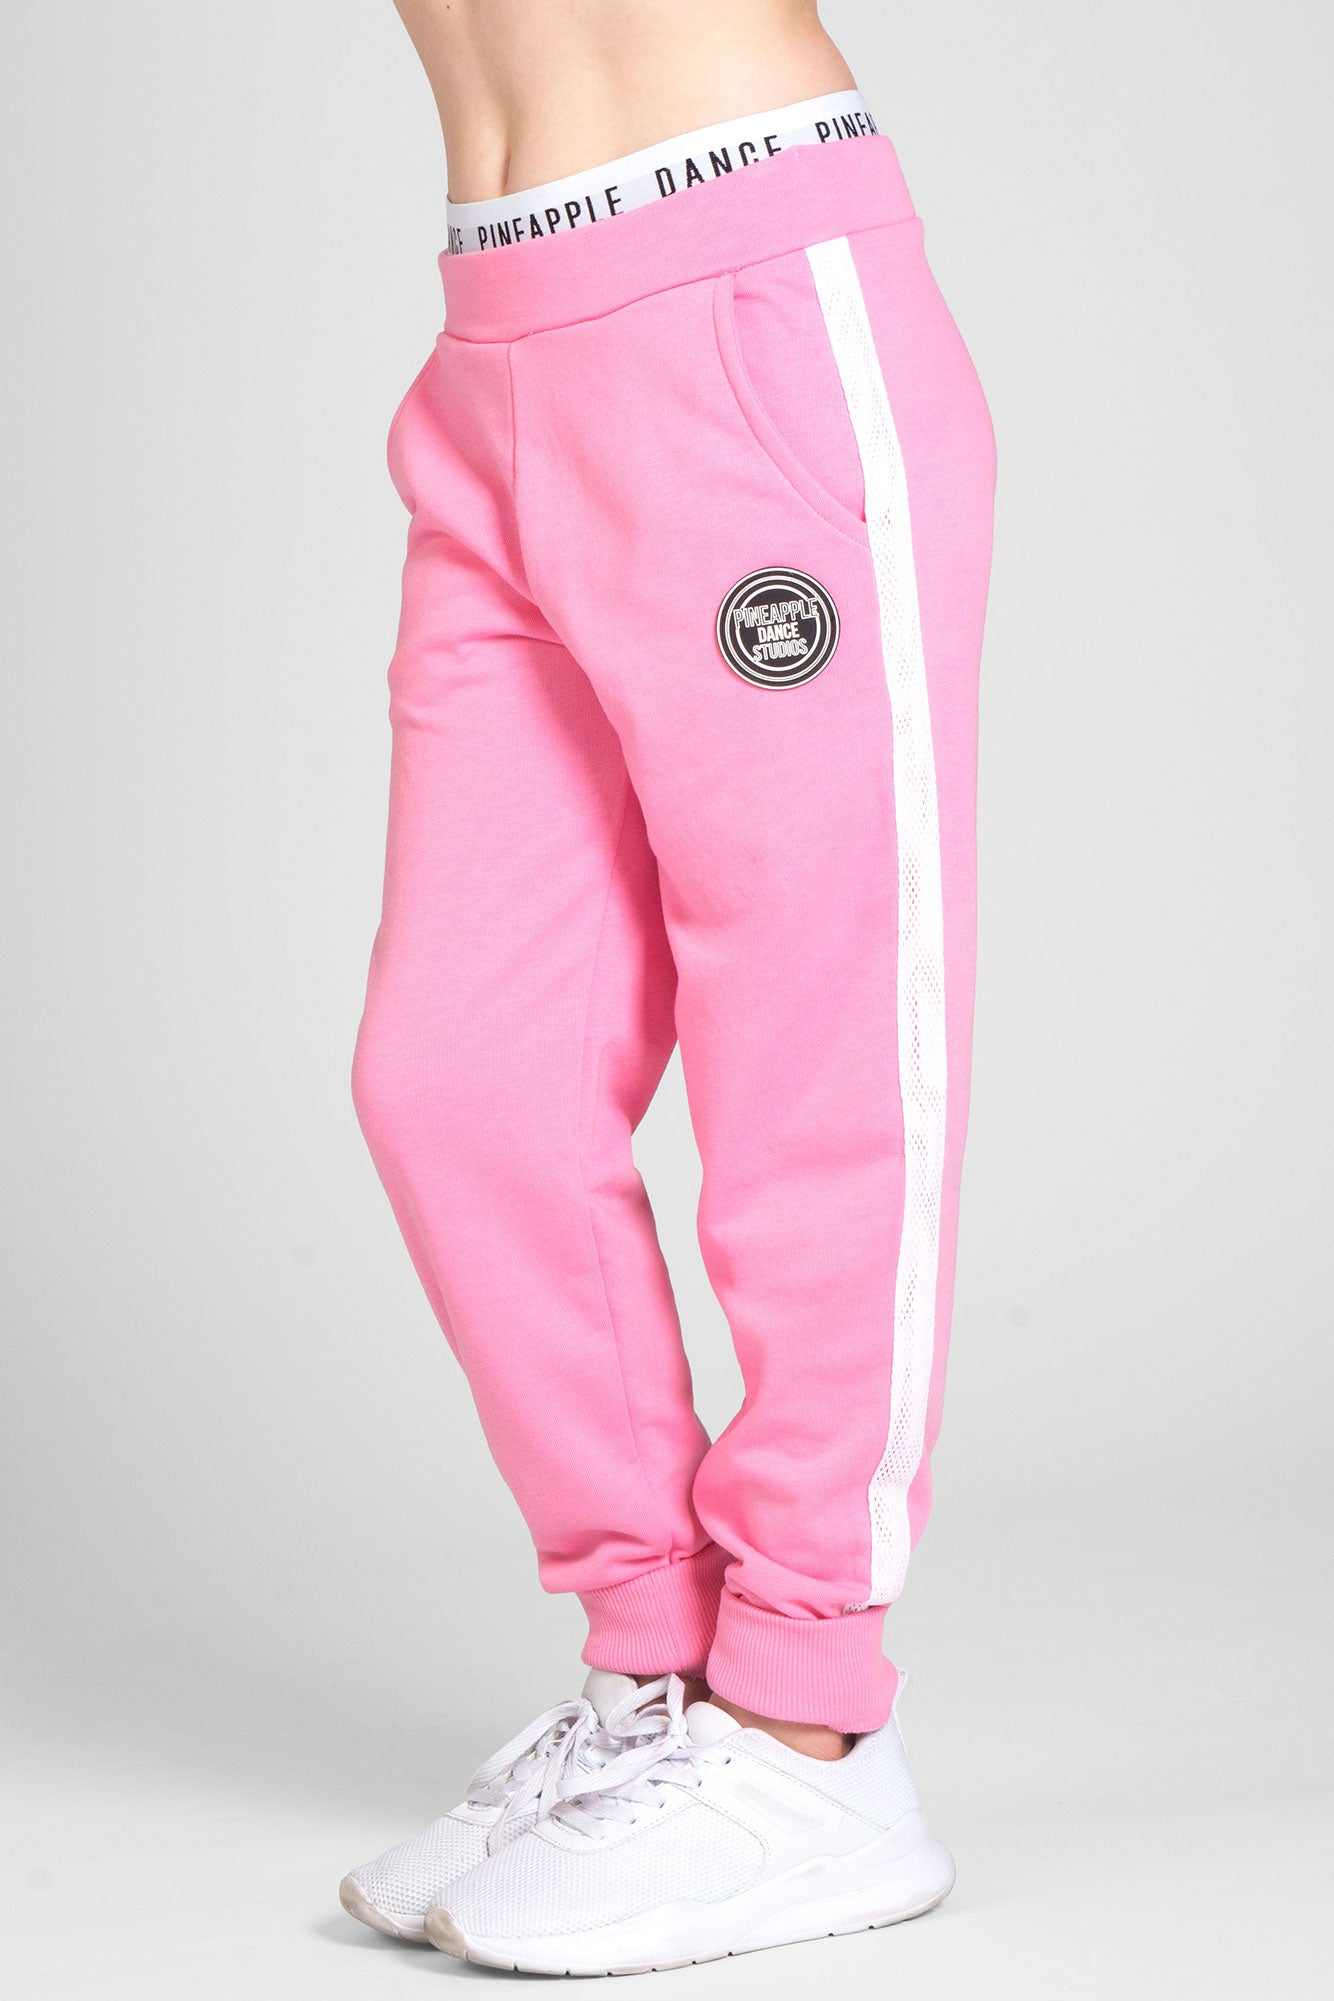 PINEAPPLE Dancewear Girls Ombre Stripe Jogger Trackpants Pink